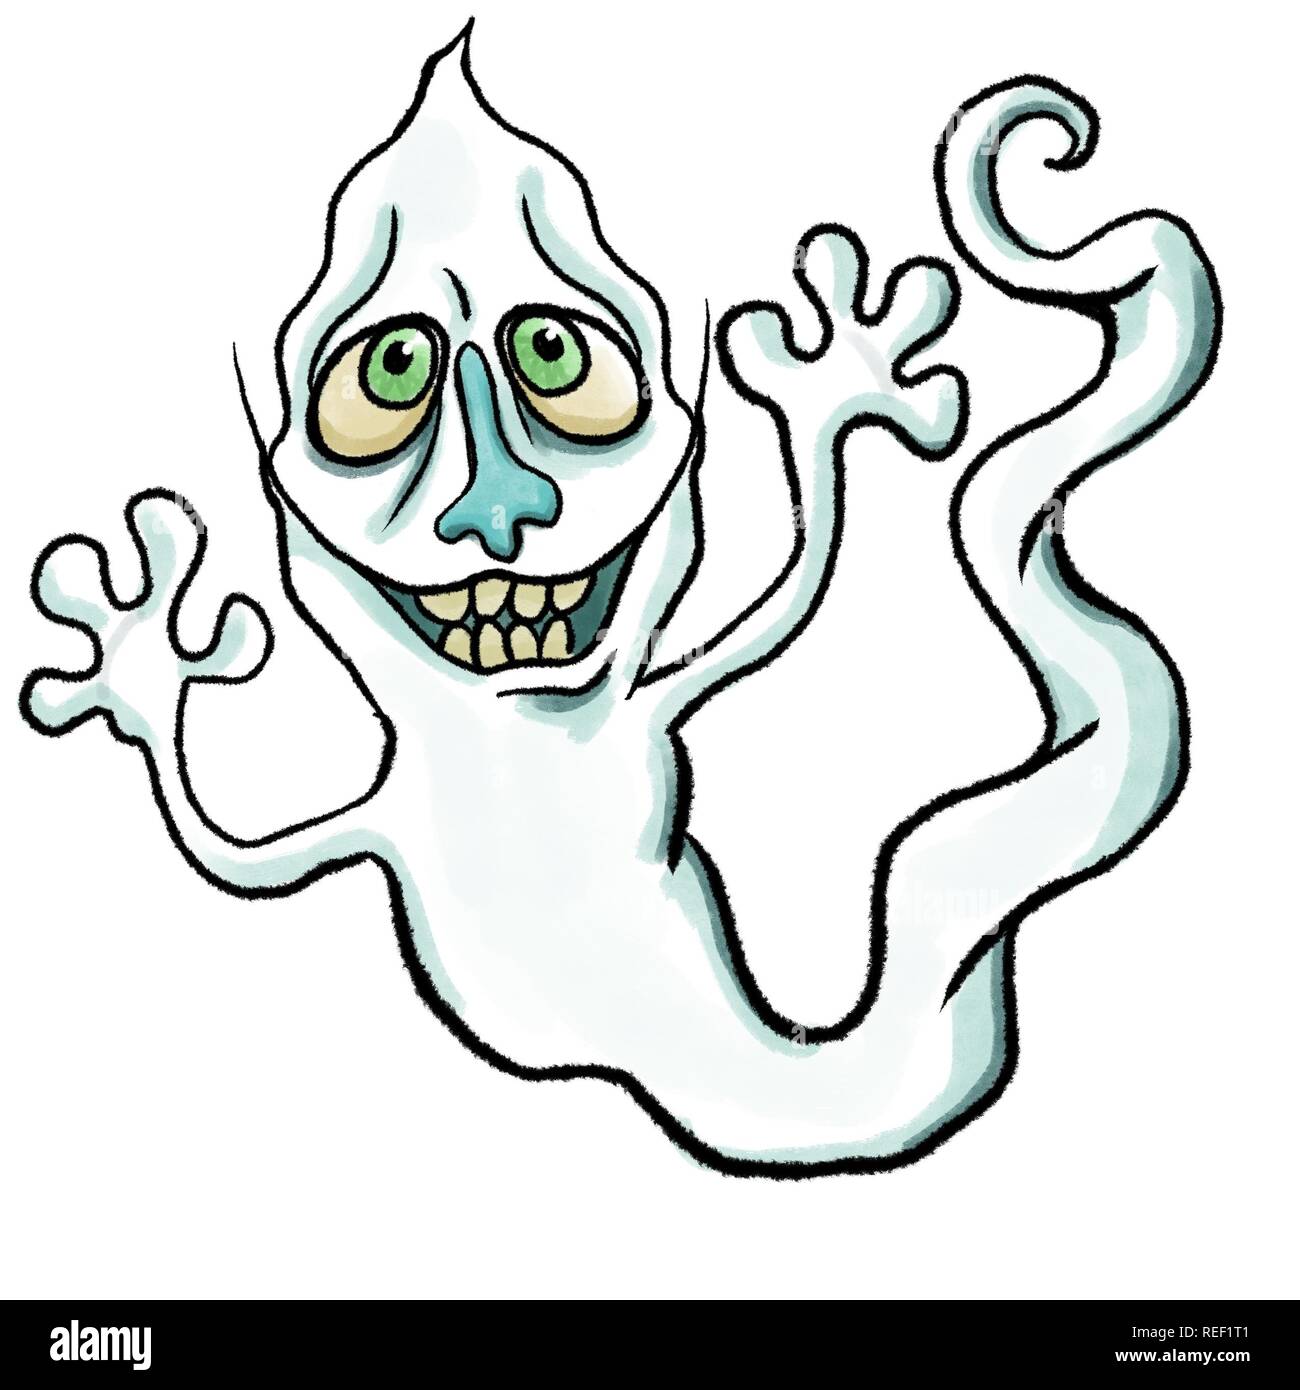 Spooky halloween illustrazione dei fantasmi Foto Stock